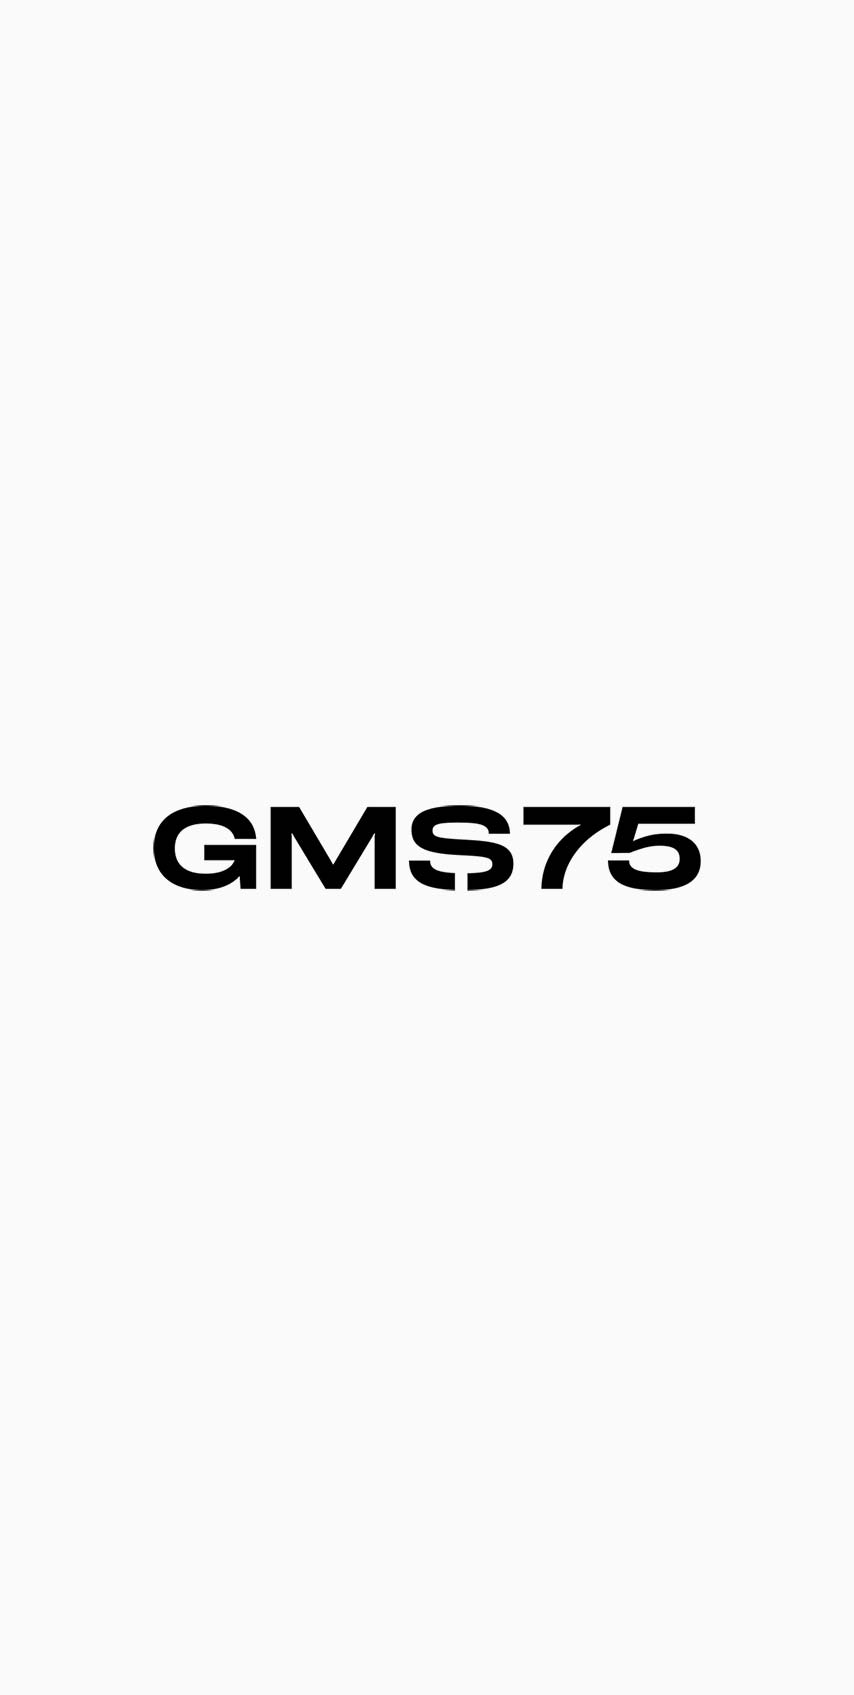 Logo Gms75